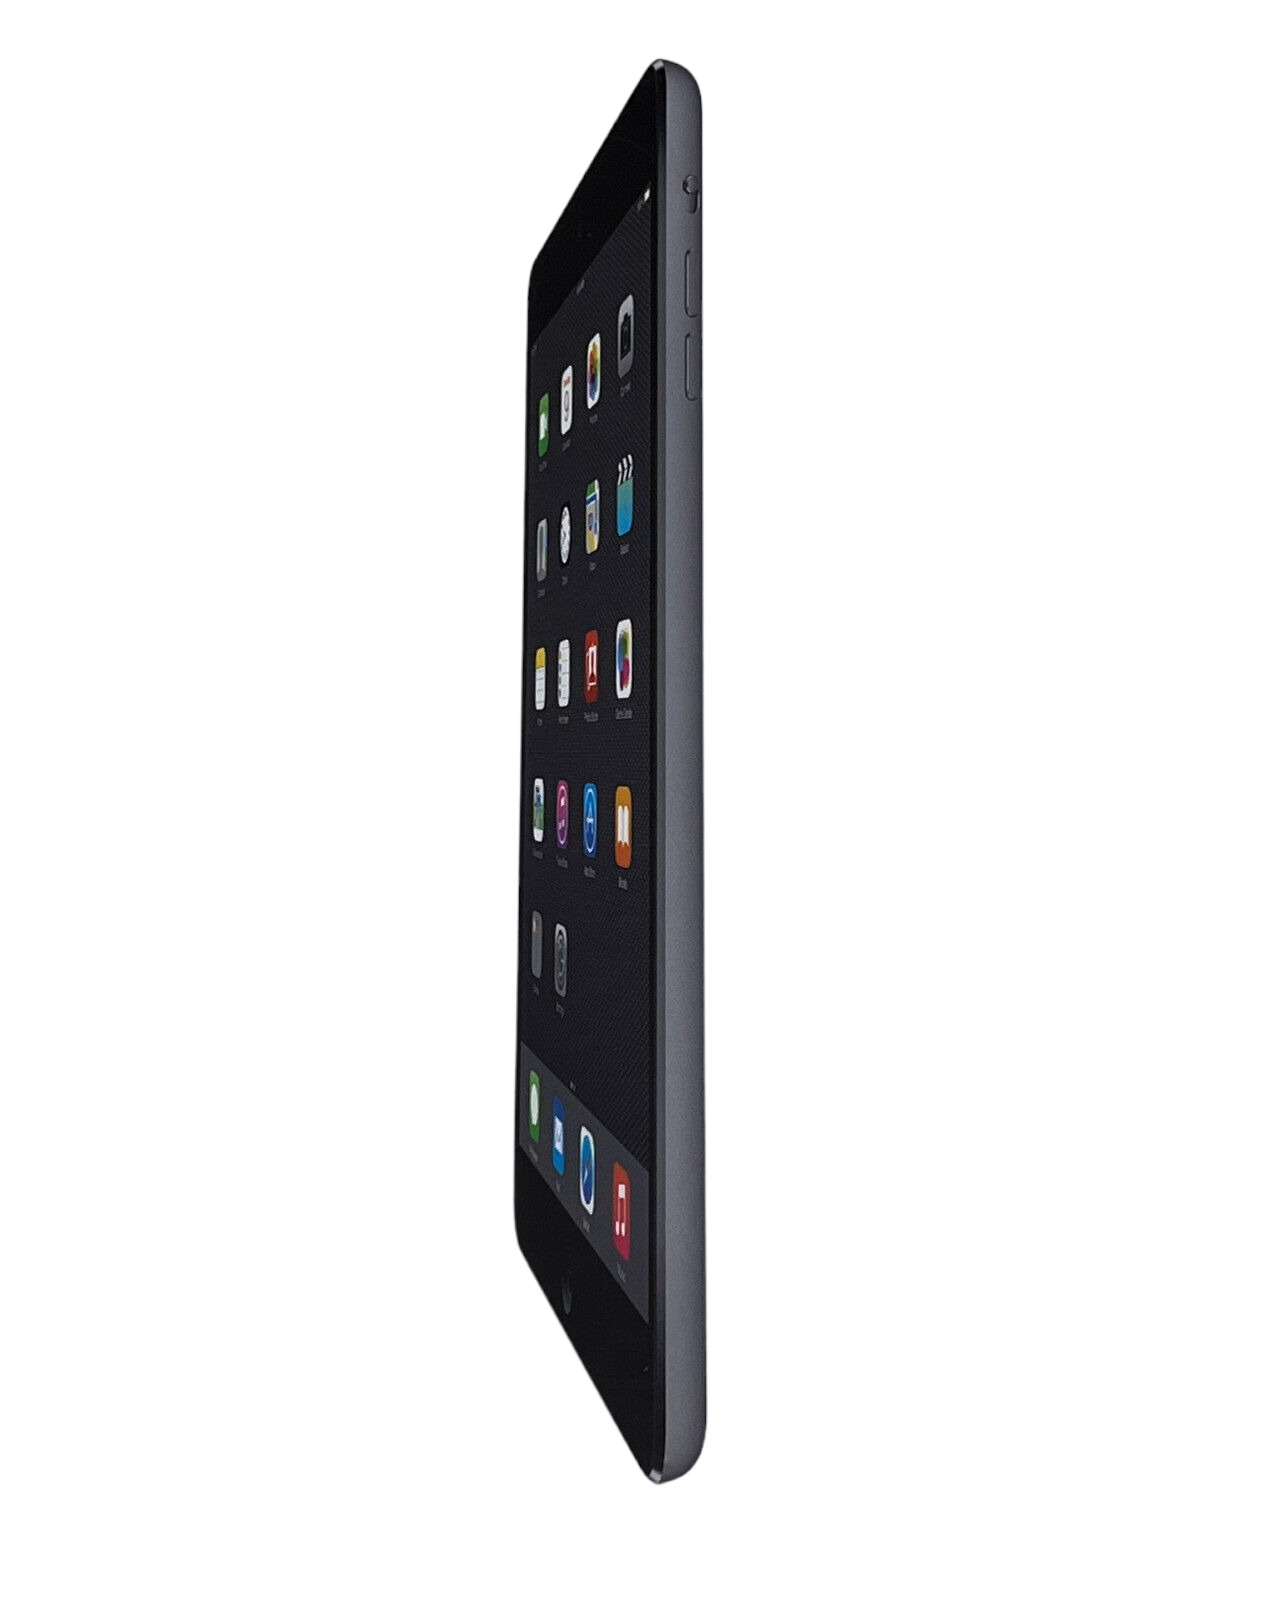 Apple iPad mini 2 16GB Wi-Fi Space Gray ME276LL/A A1489 iOS 8 NEW Sealed